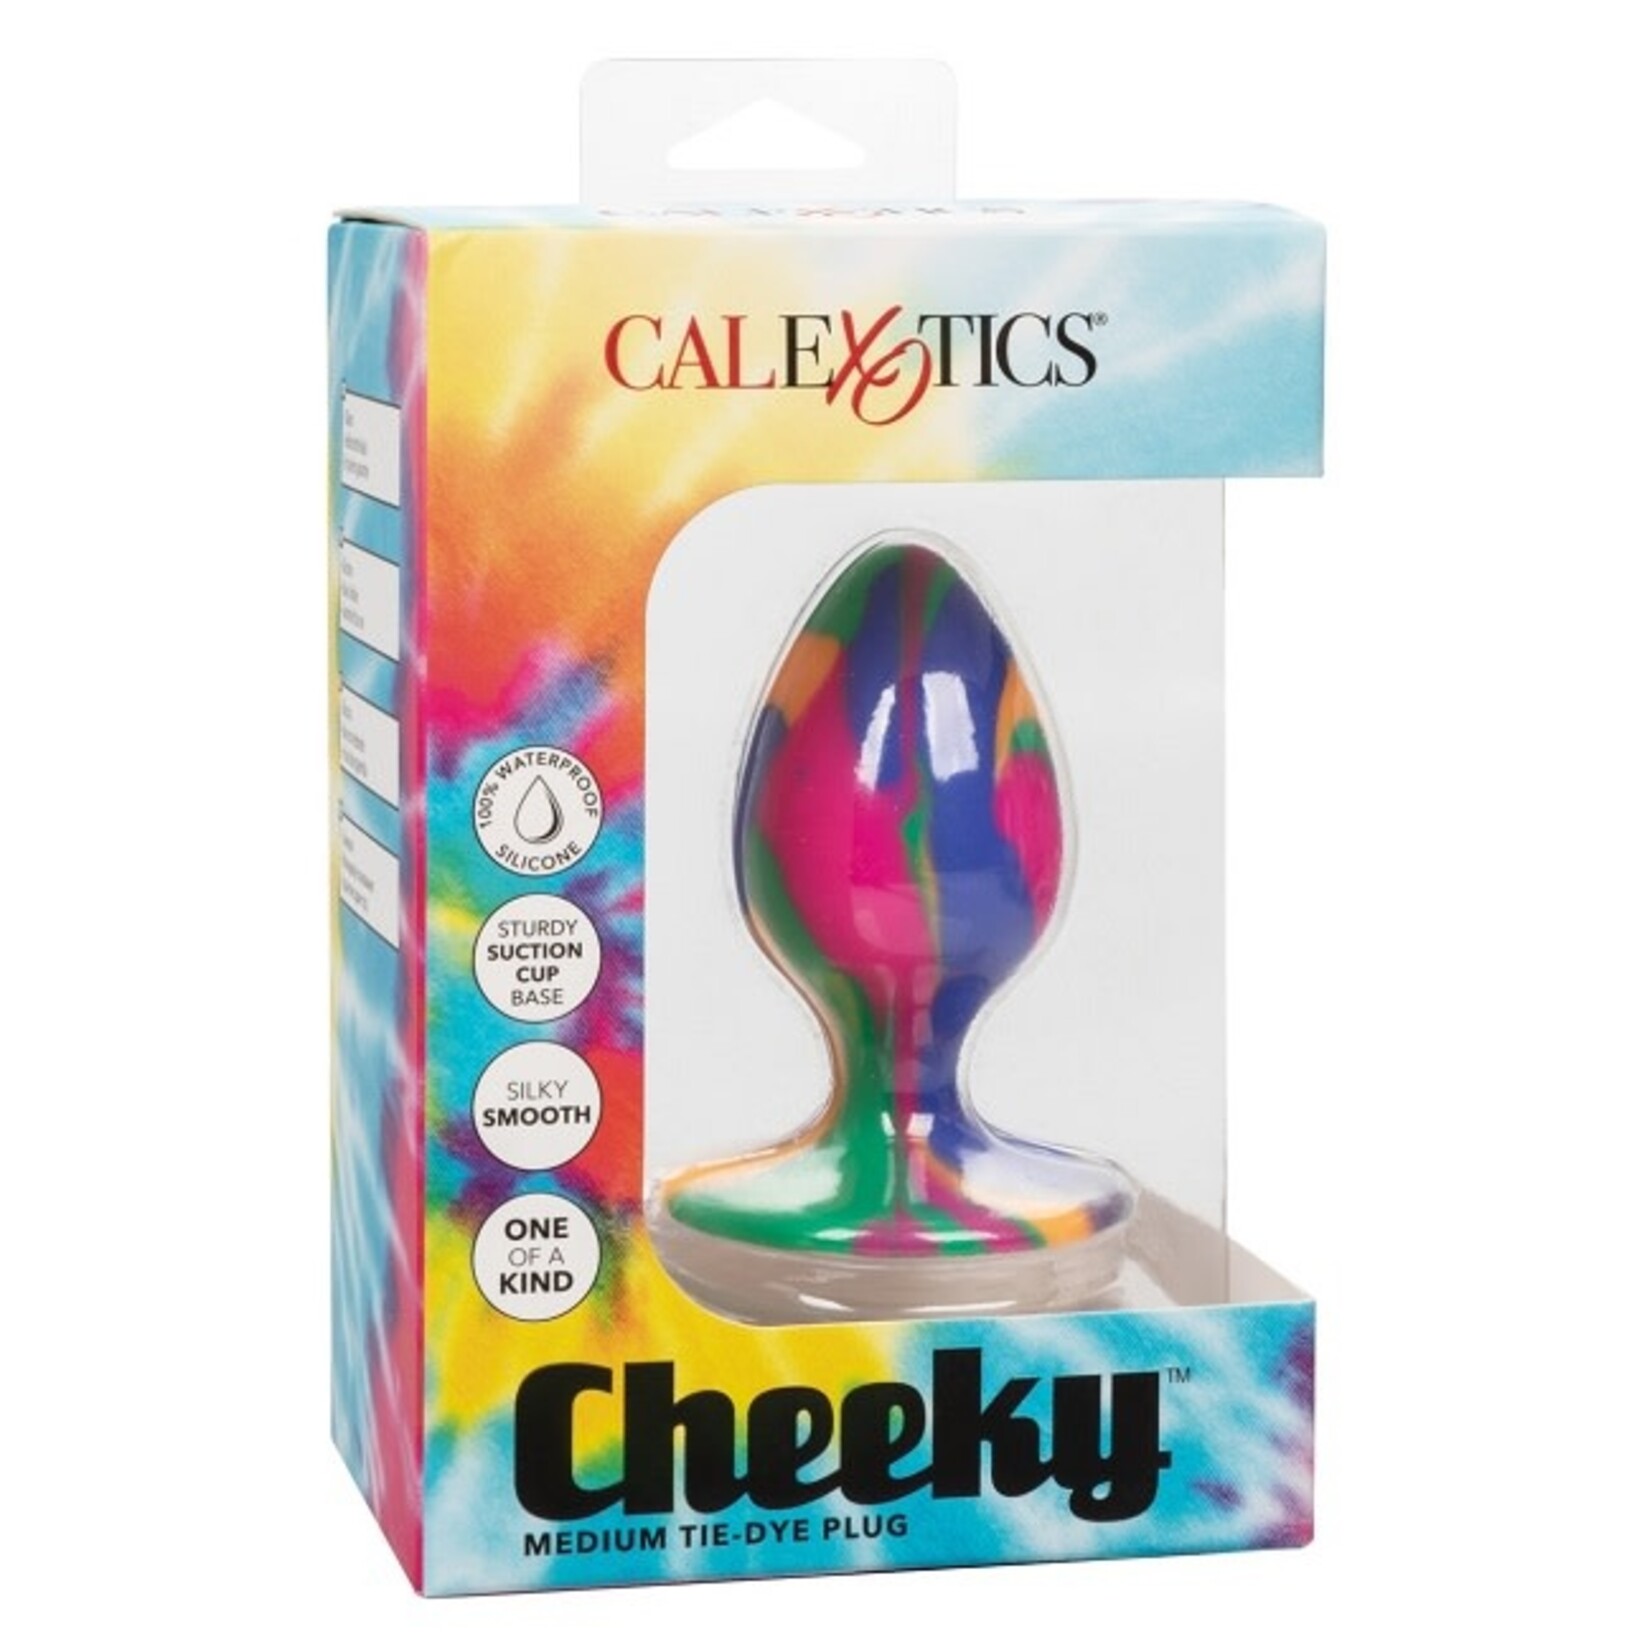 CalExotics Cheeky Medium Tie-Dye Plug